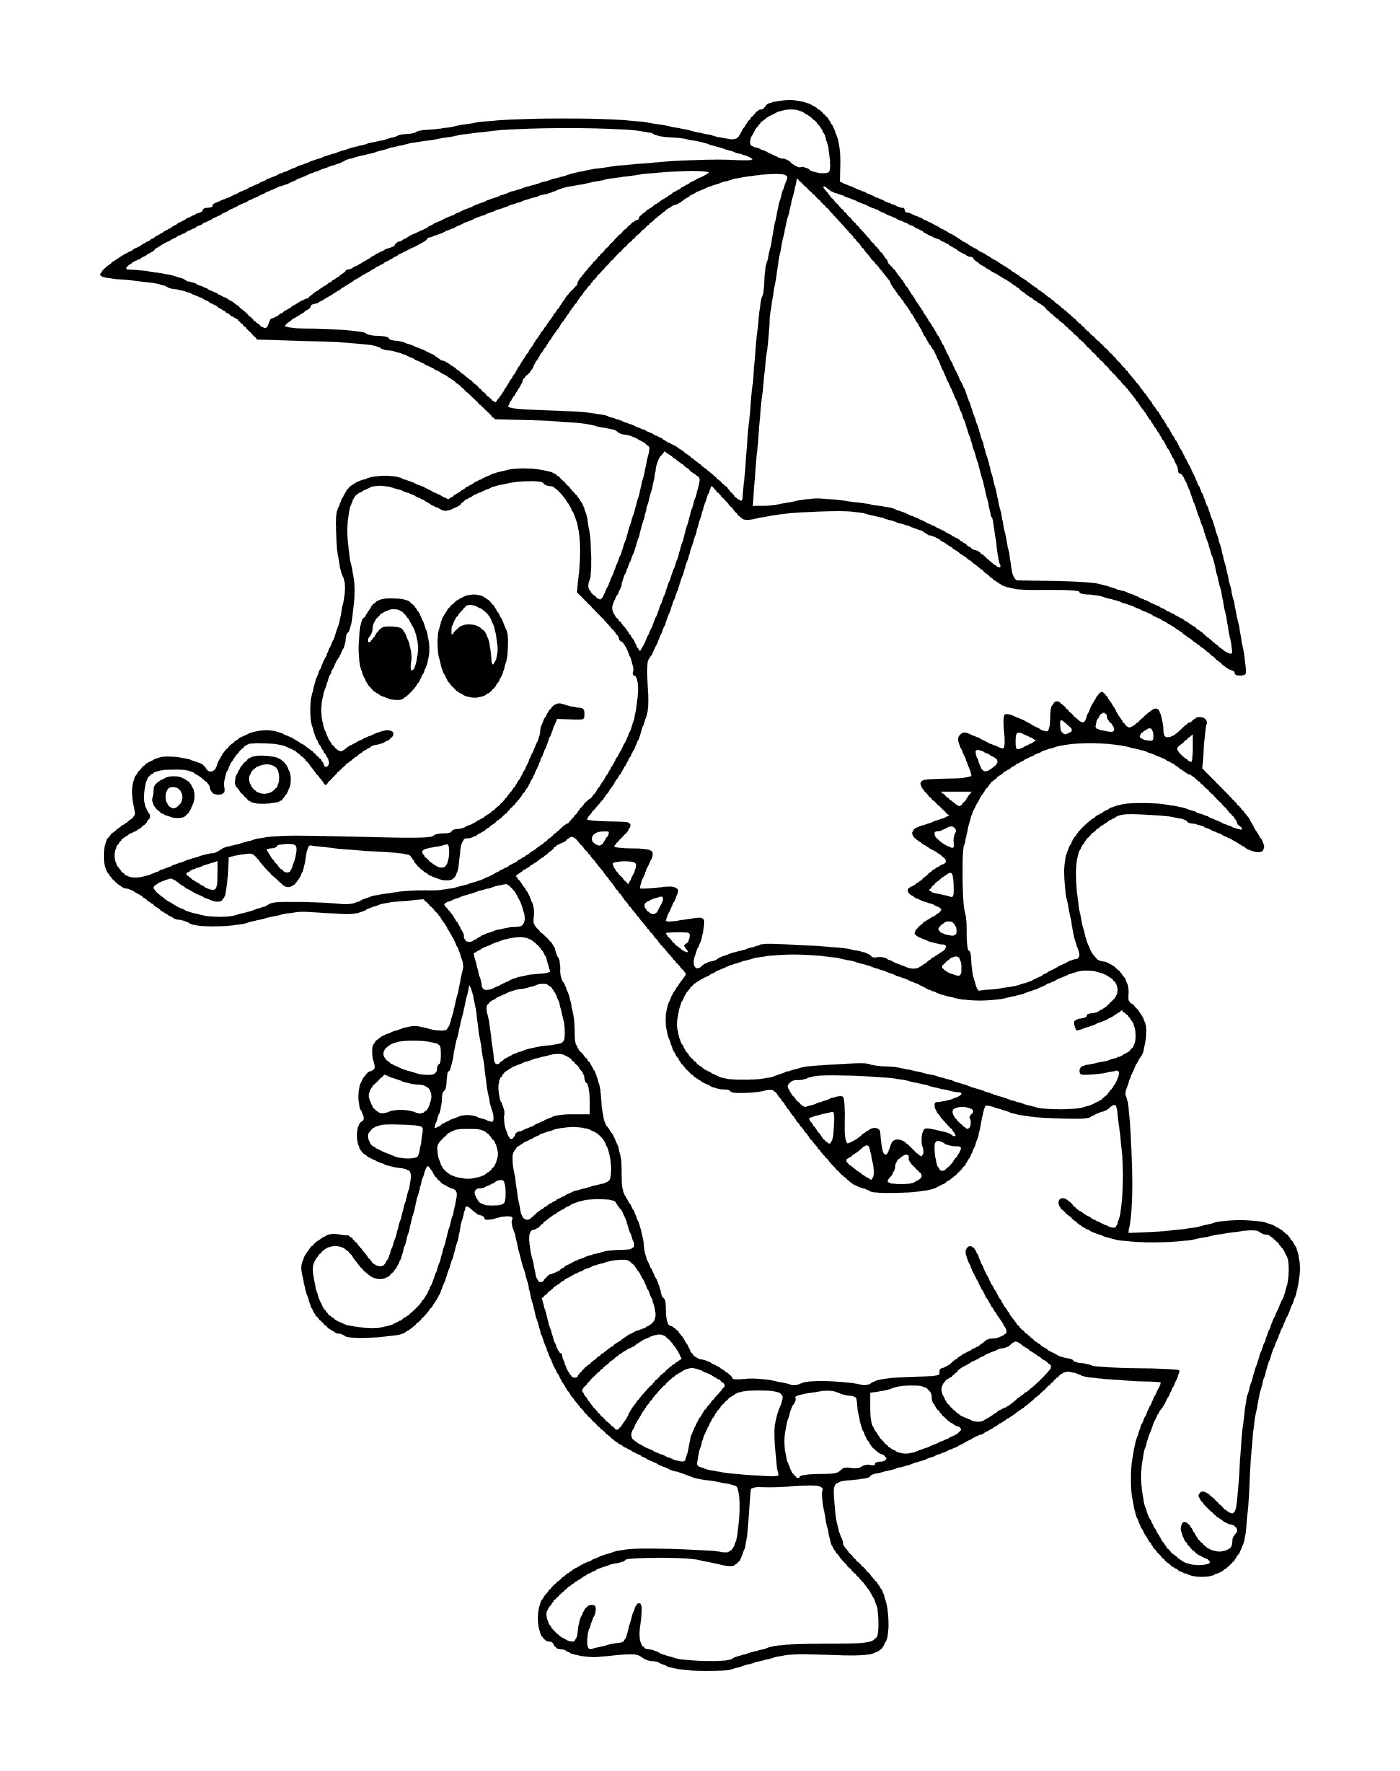  A crocodile holding an umbrella 